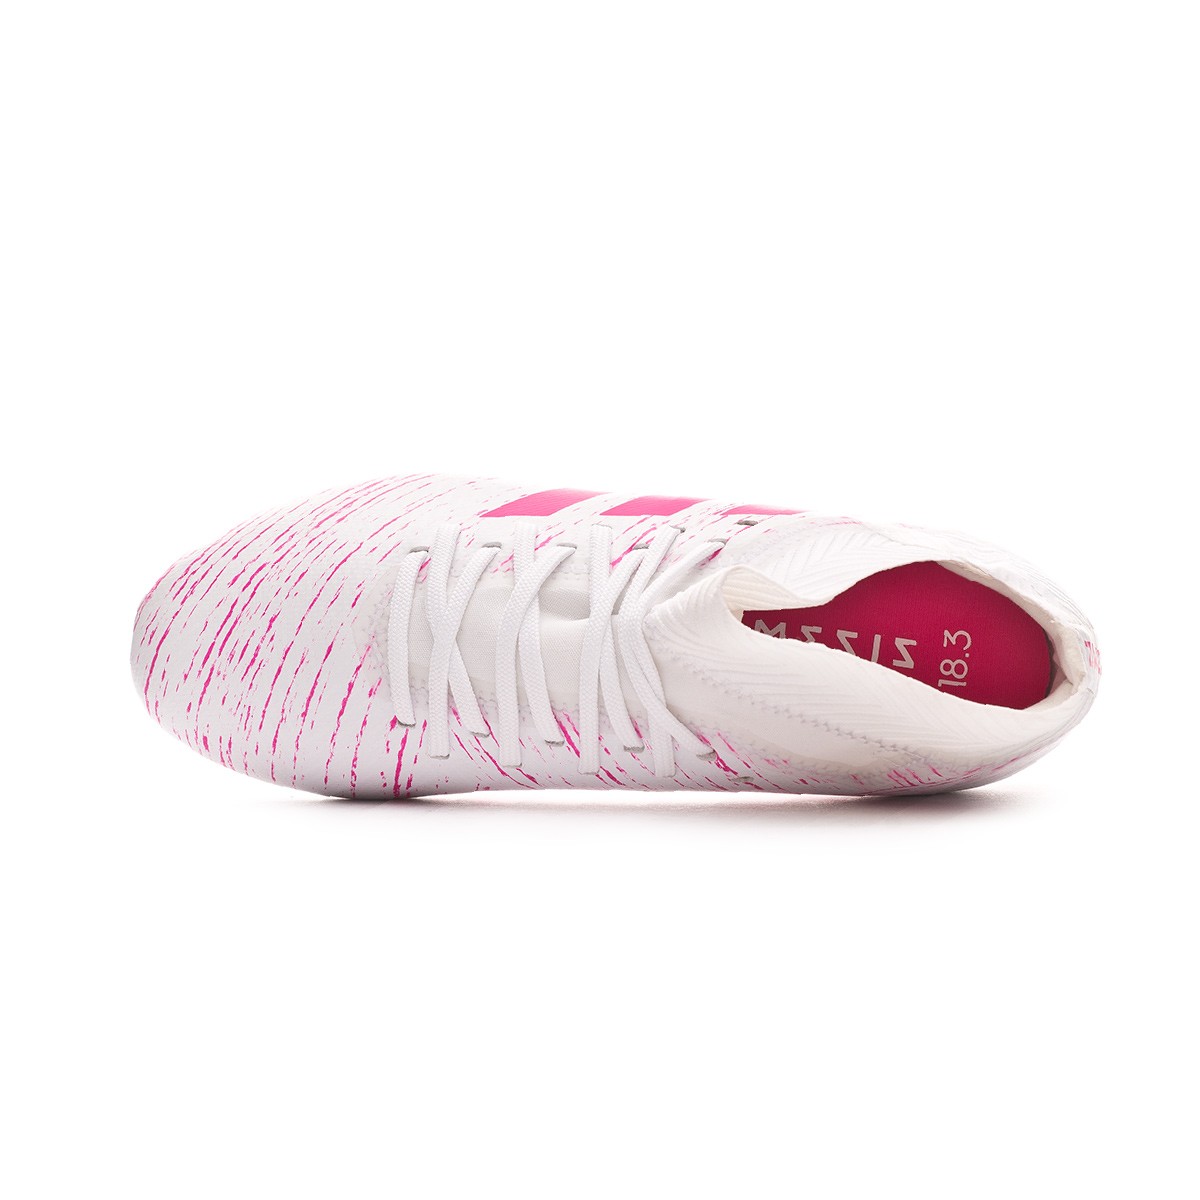 adidas nemeziz pink and white